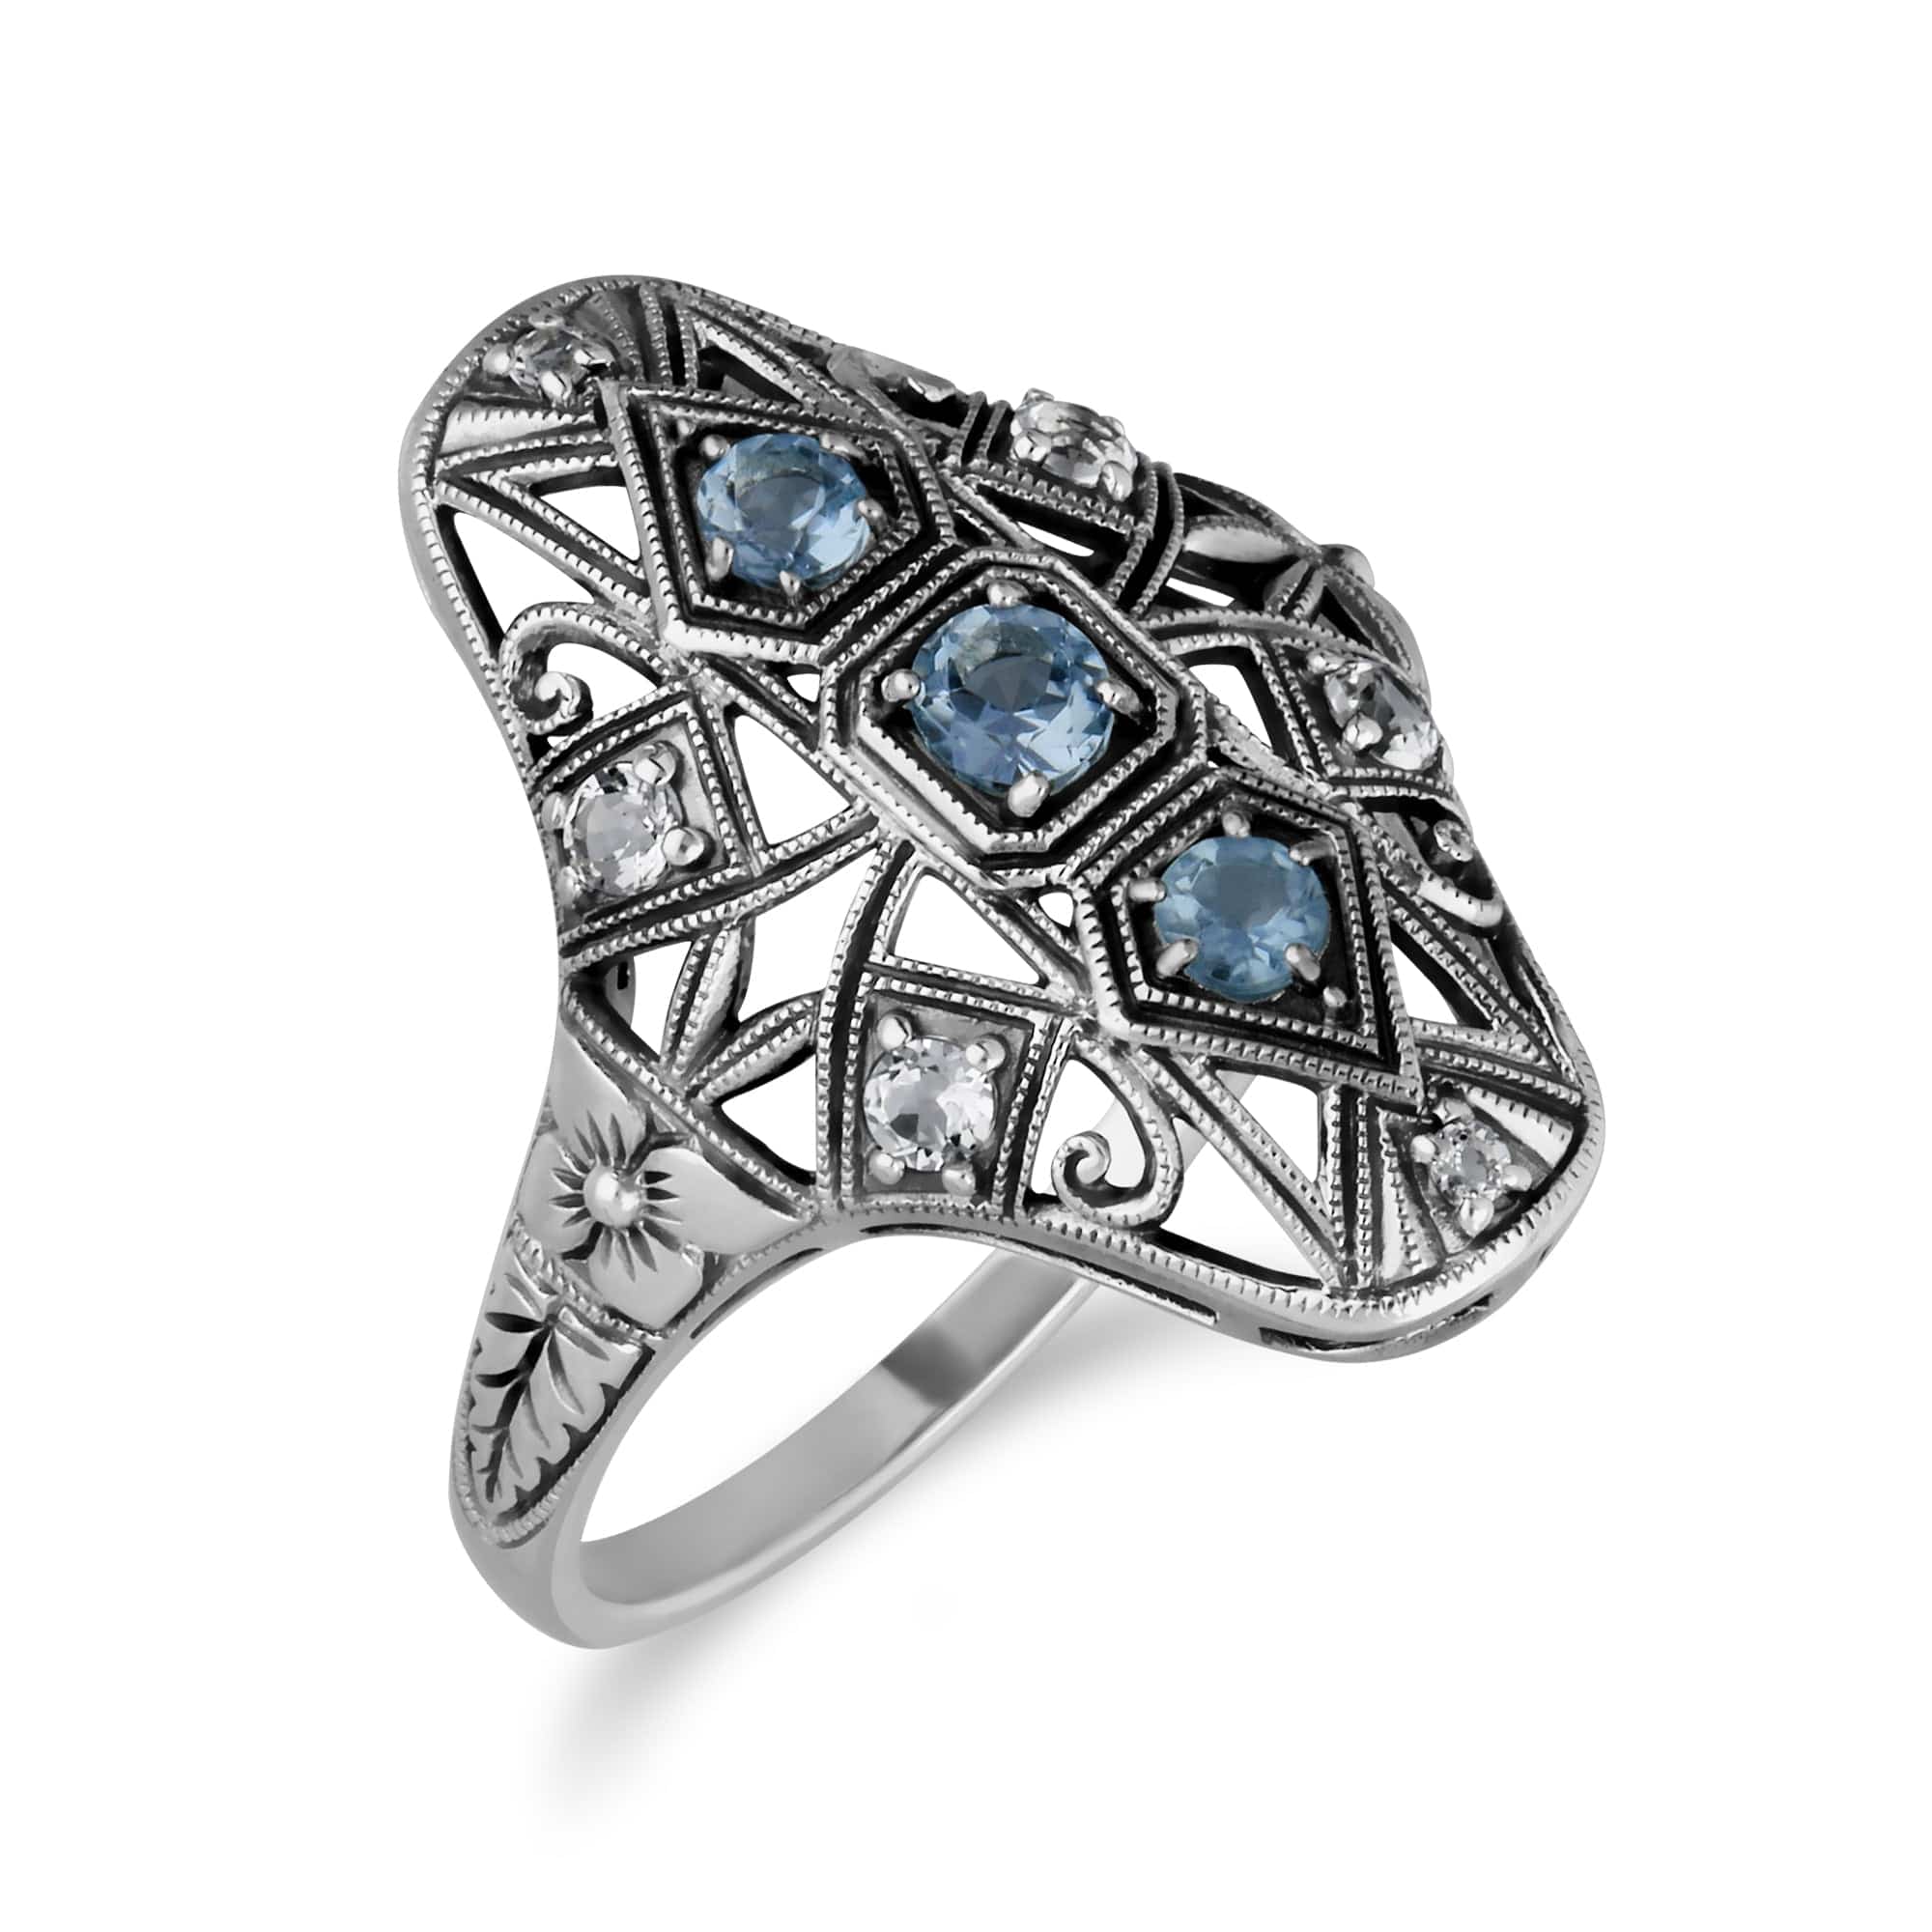 Art Nouveau Style Round Blue & White Topaz Statement Ring in 925 Sterling Silver - Gemondo